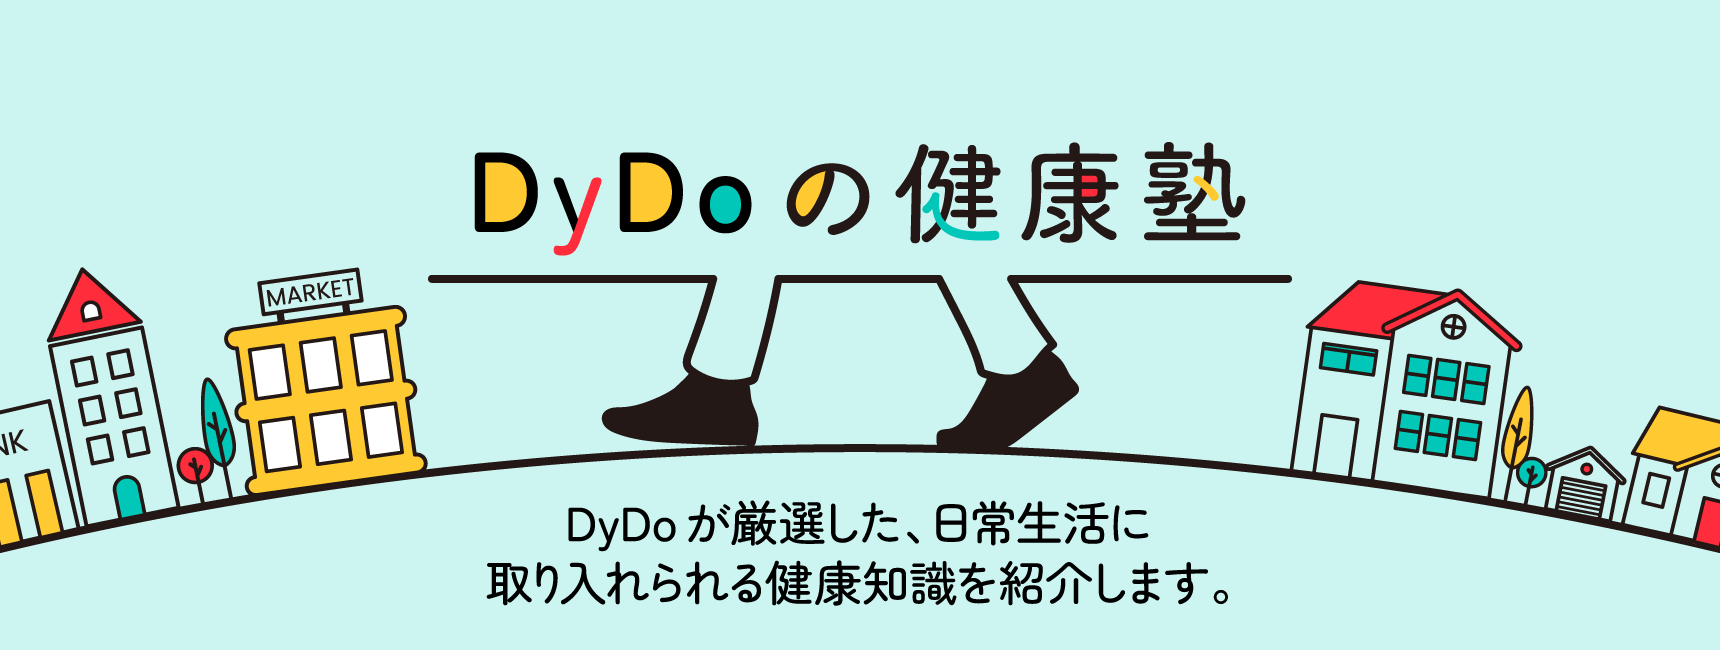 DyDoの健康塾